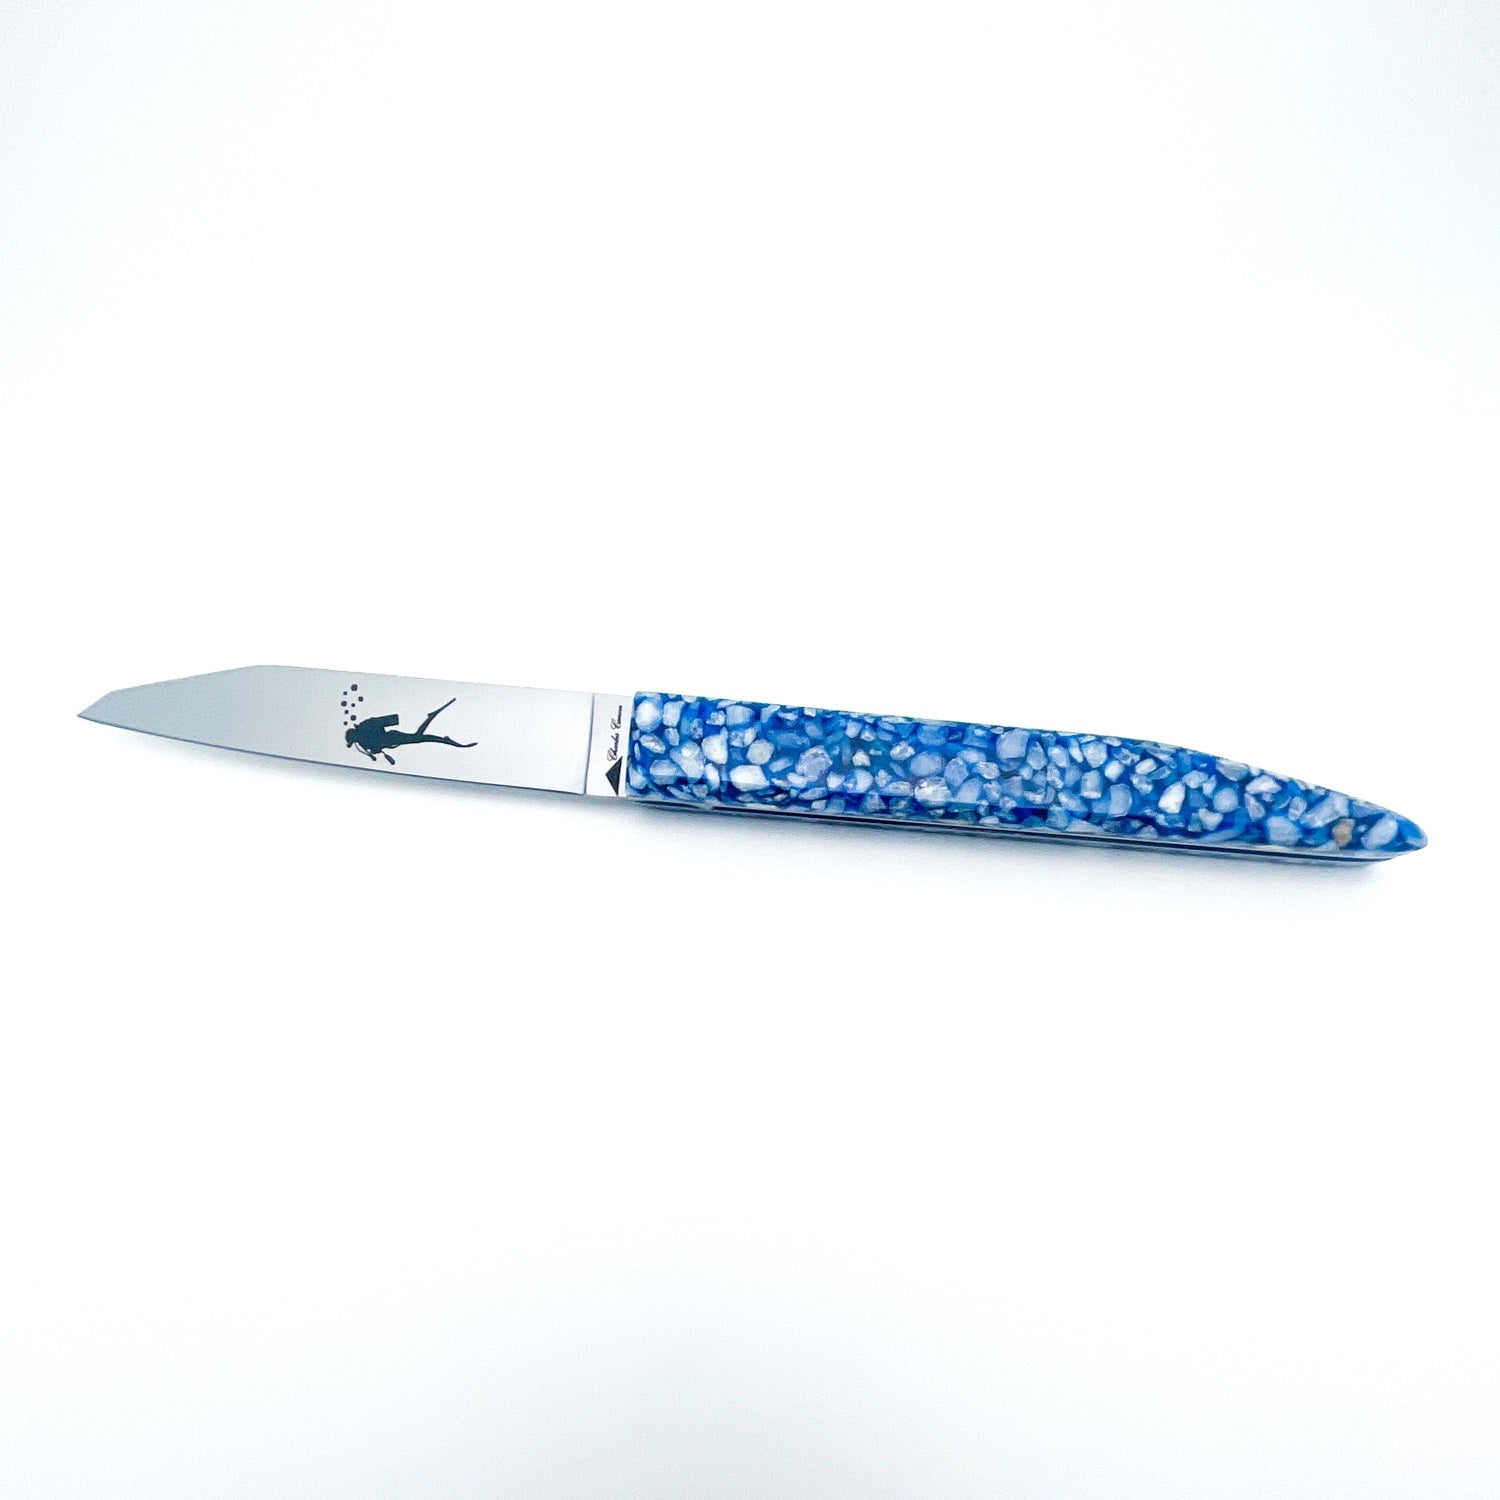 Folding knife The big blue